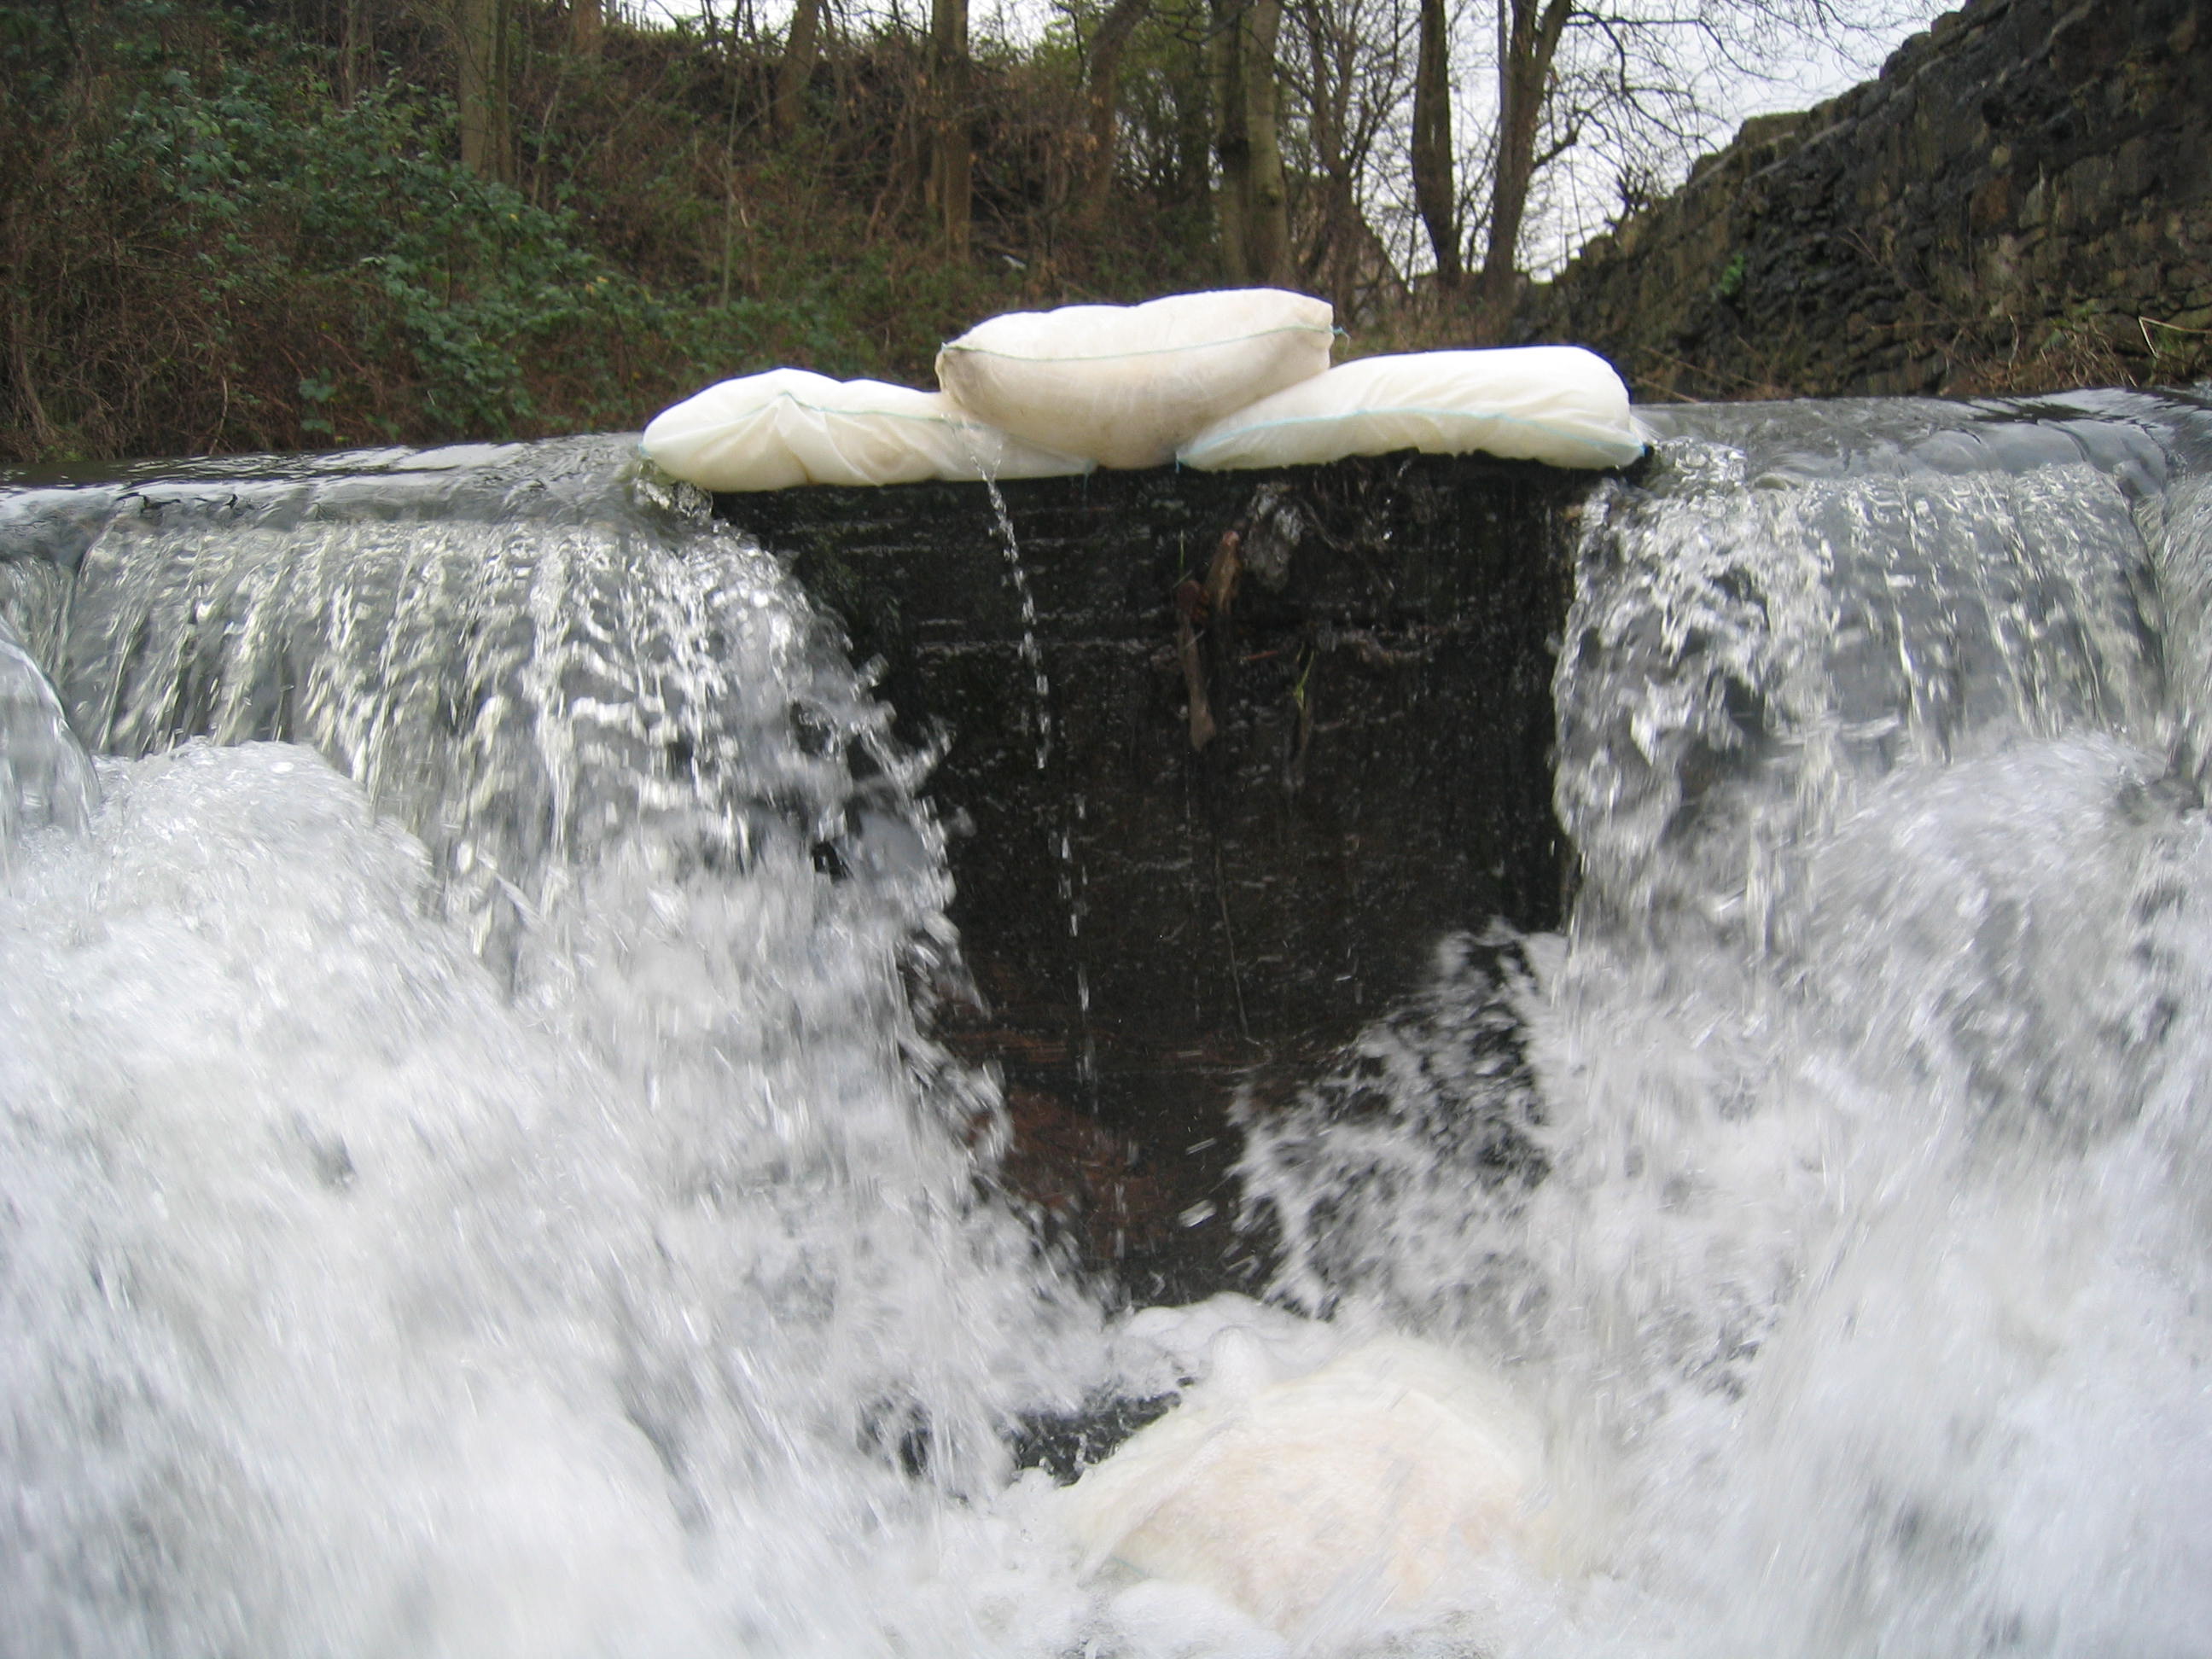 FloodSax stopping waterfall 9.jpg